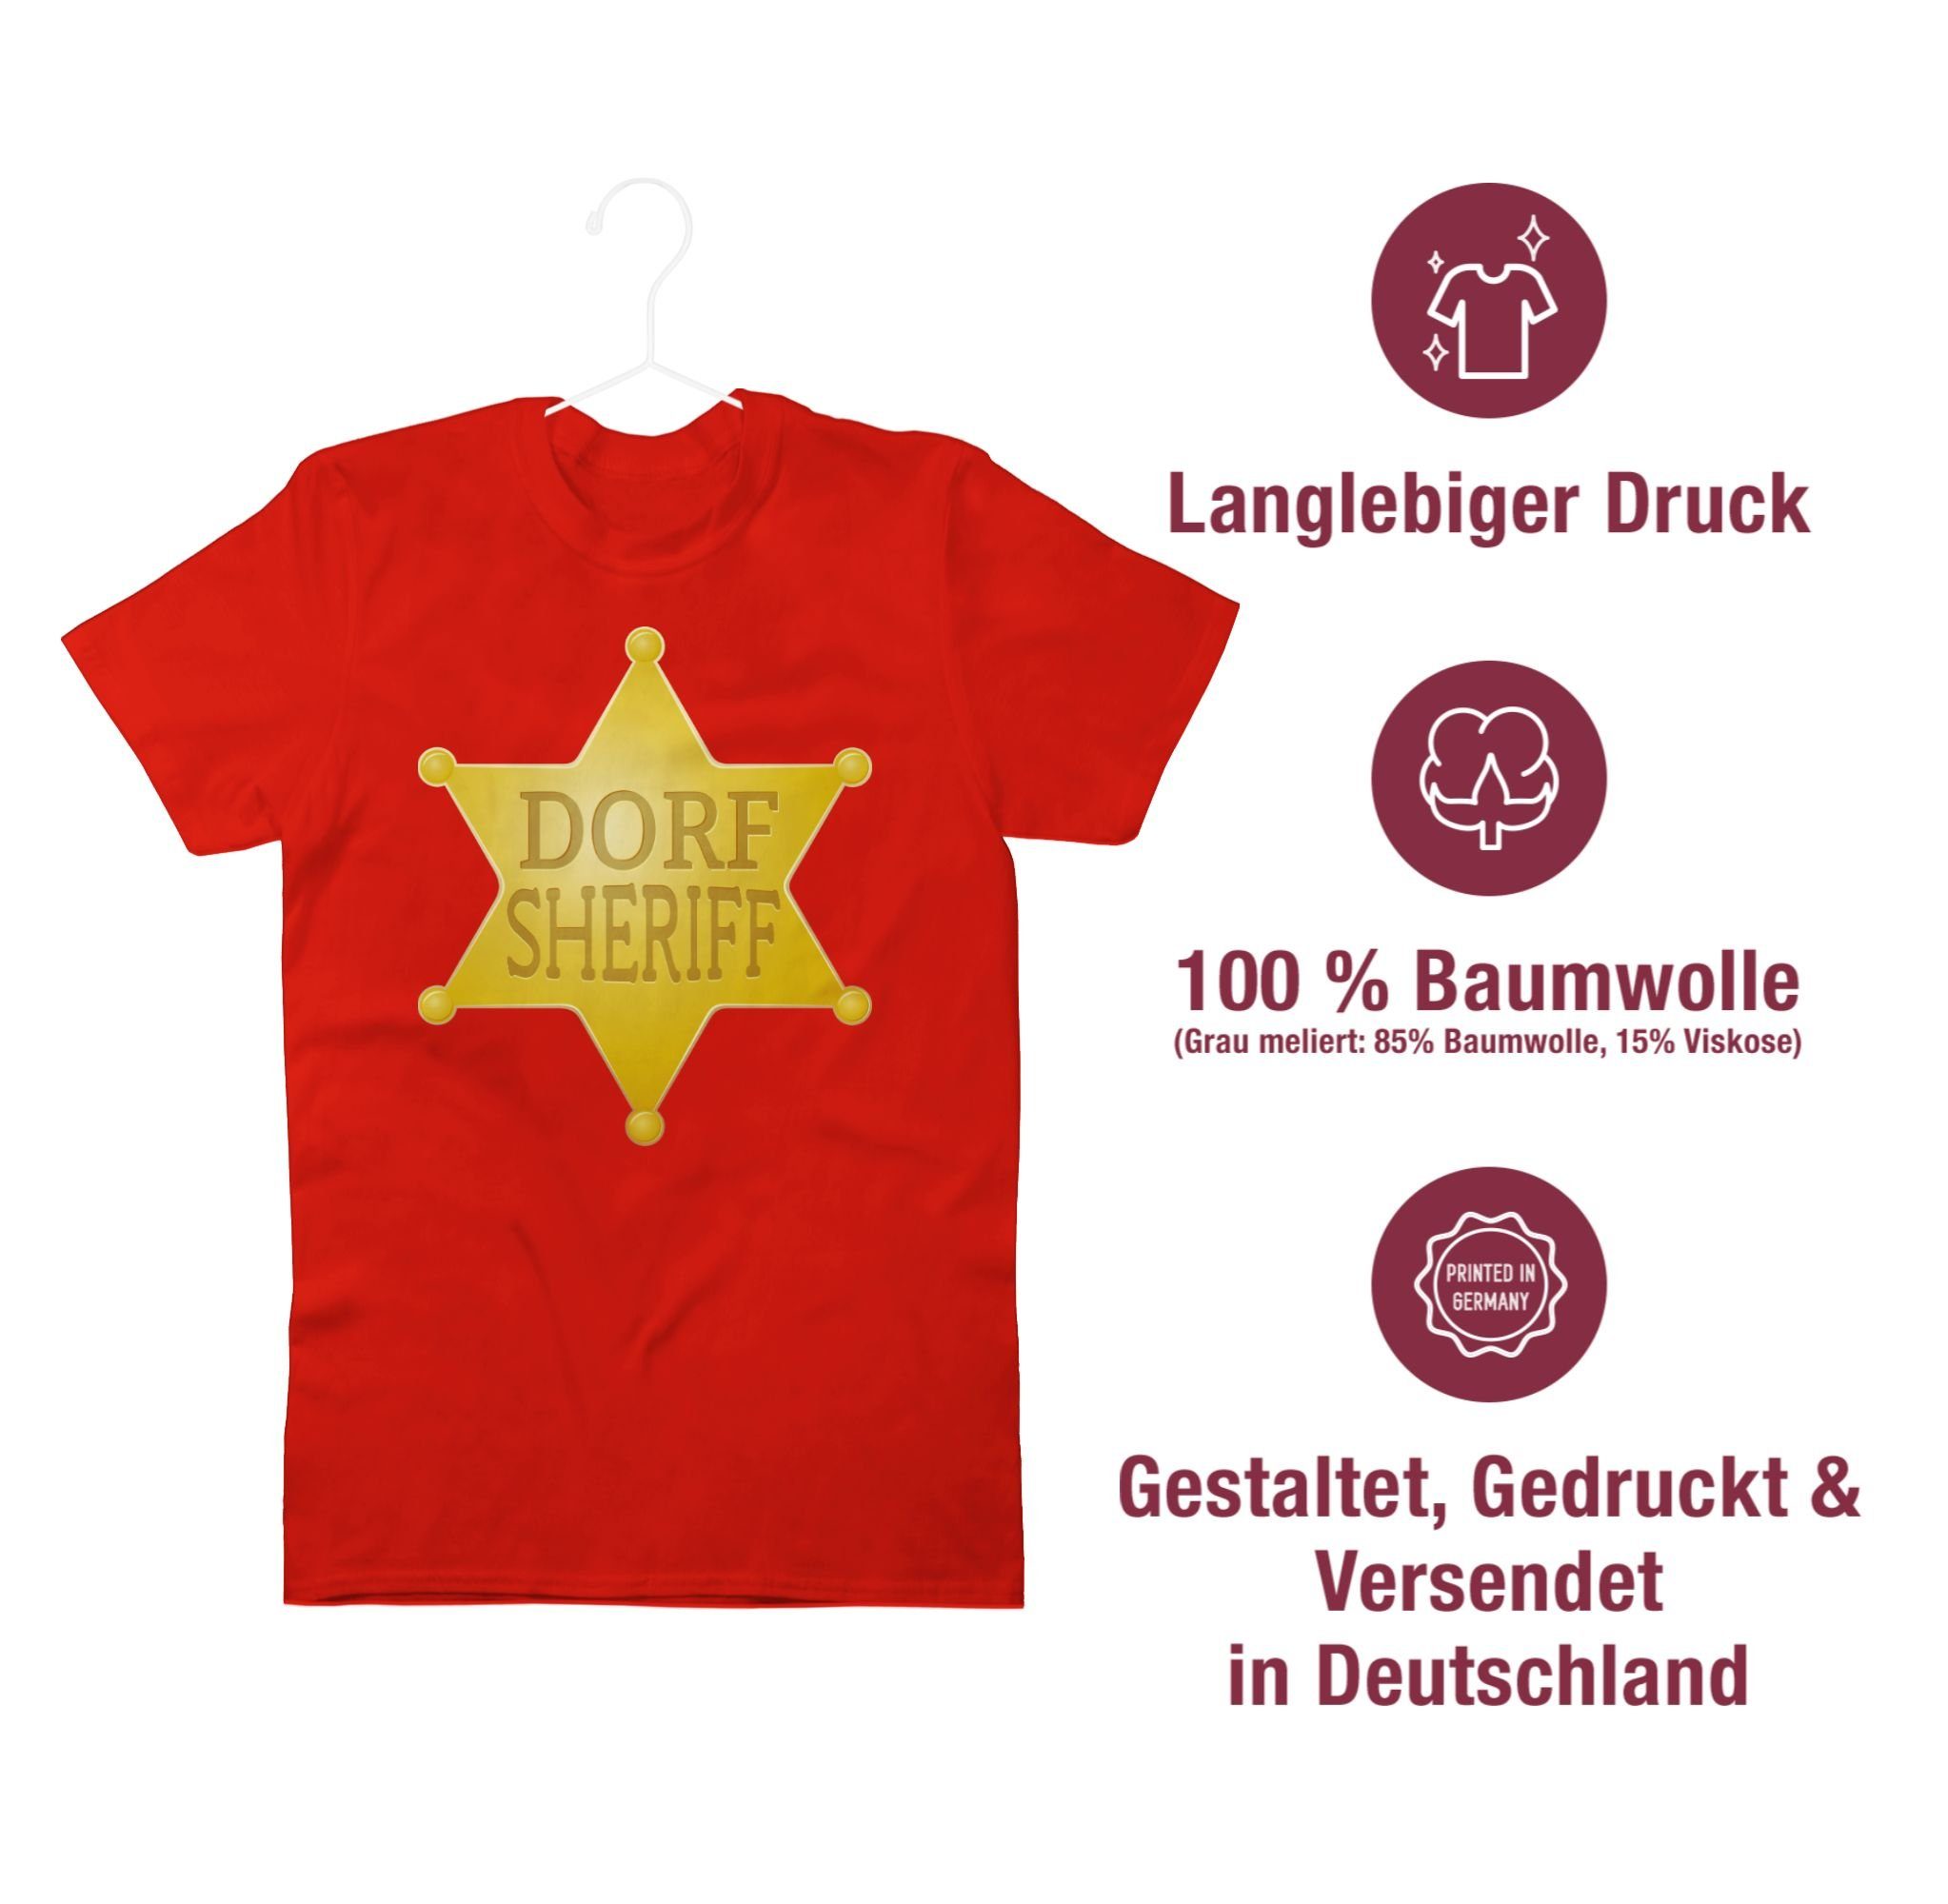 Rot Stern Shirtracer goldener 3 Dorf Sheriff T-Shirt Outfit Karneval